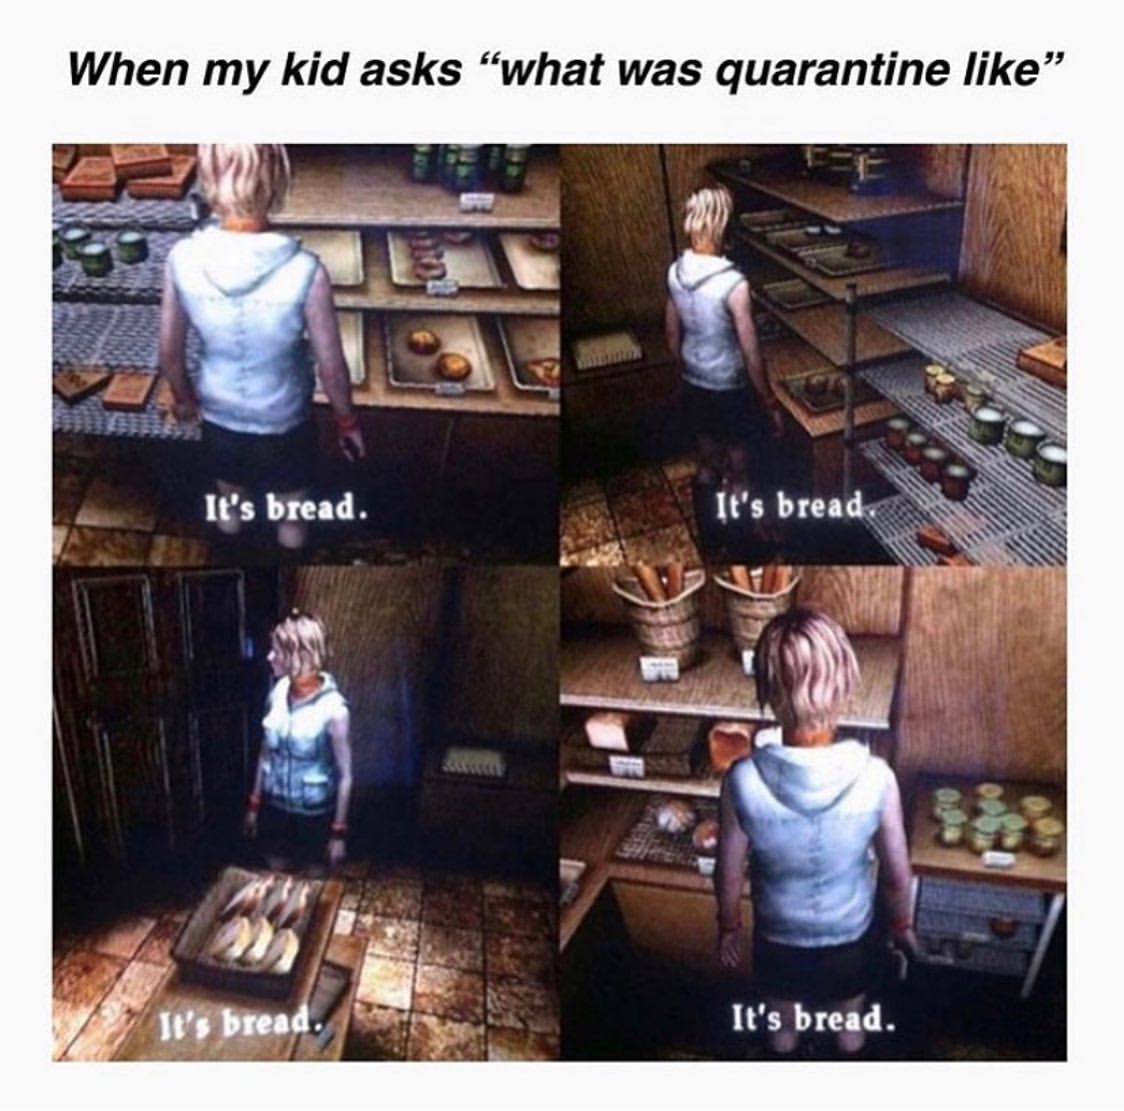 When my kid asks "what was quarantine like" bread. It's bread.